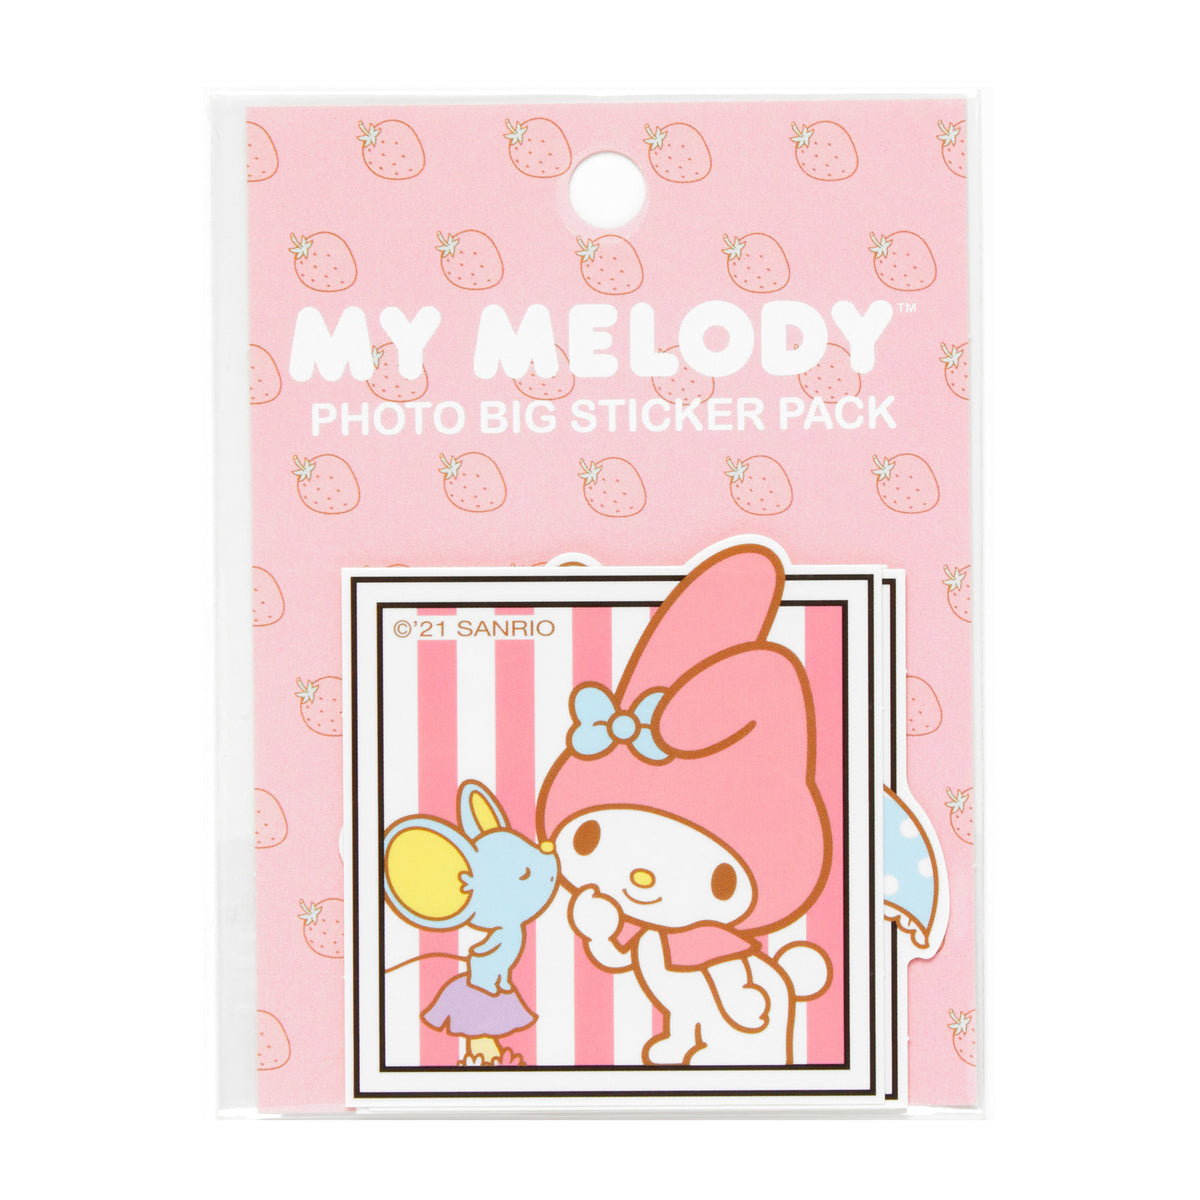 HUNET USA Characters Hello Kitty & Friends Big Sticker Pack